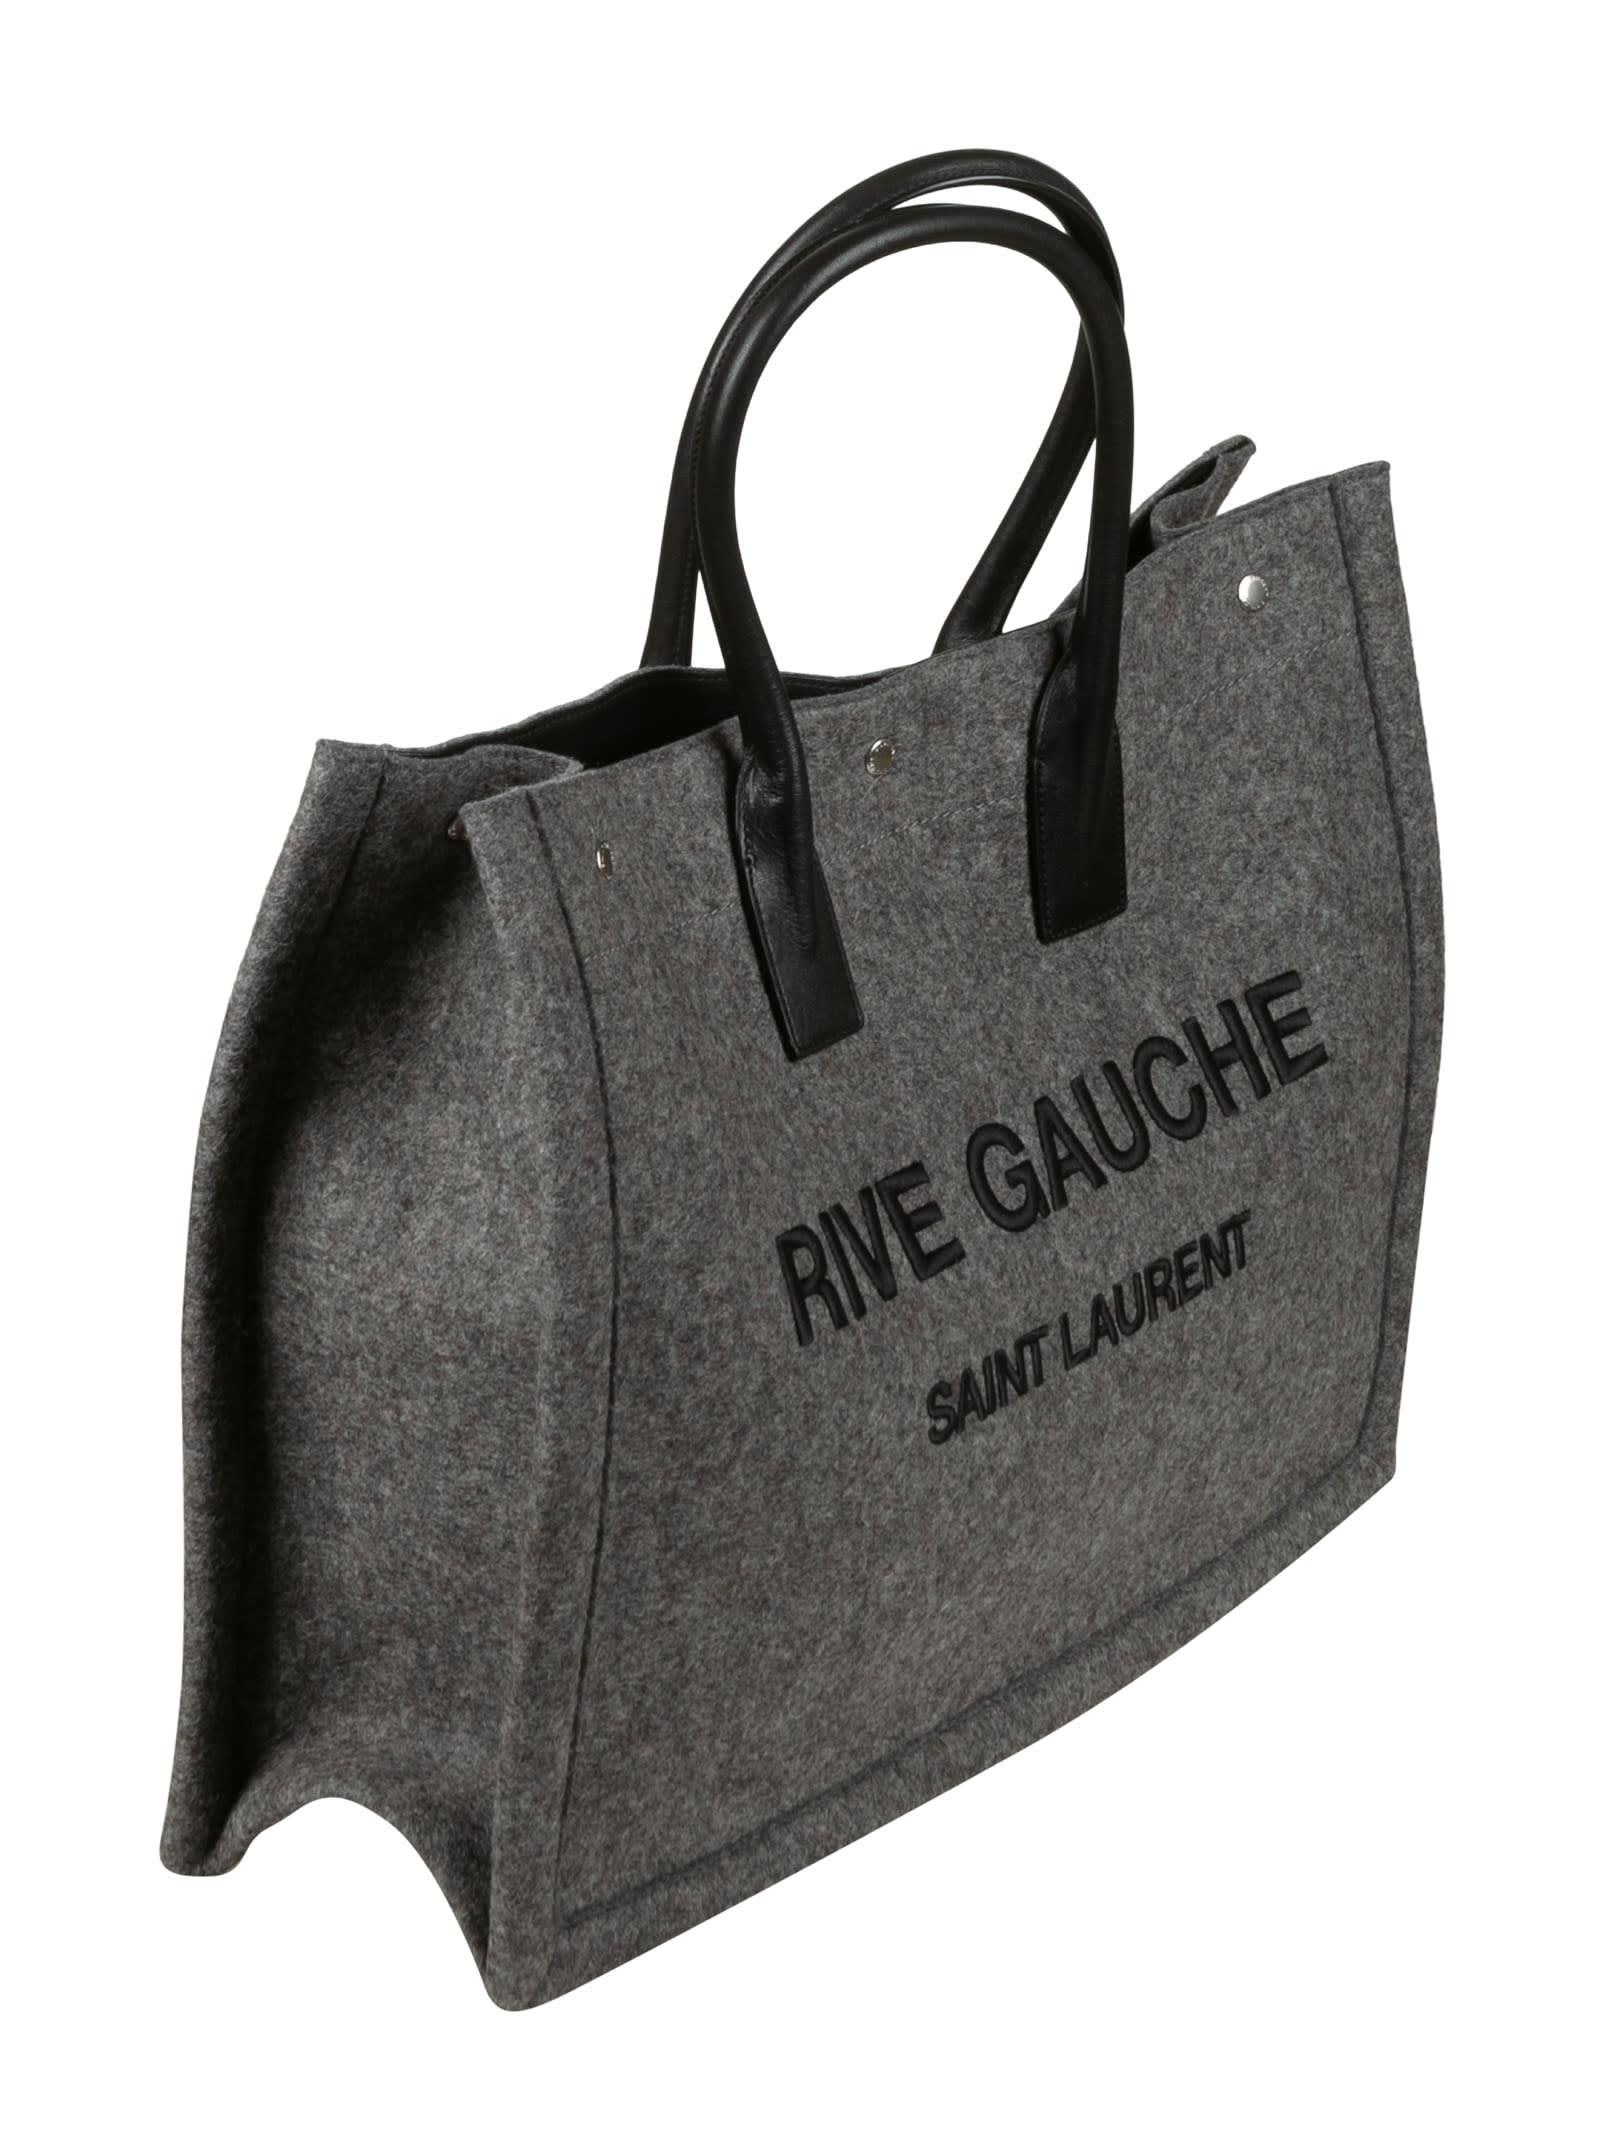 Guy Laroche Black/Gray Monogram Tote Bag at FORZIERI